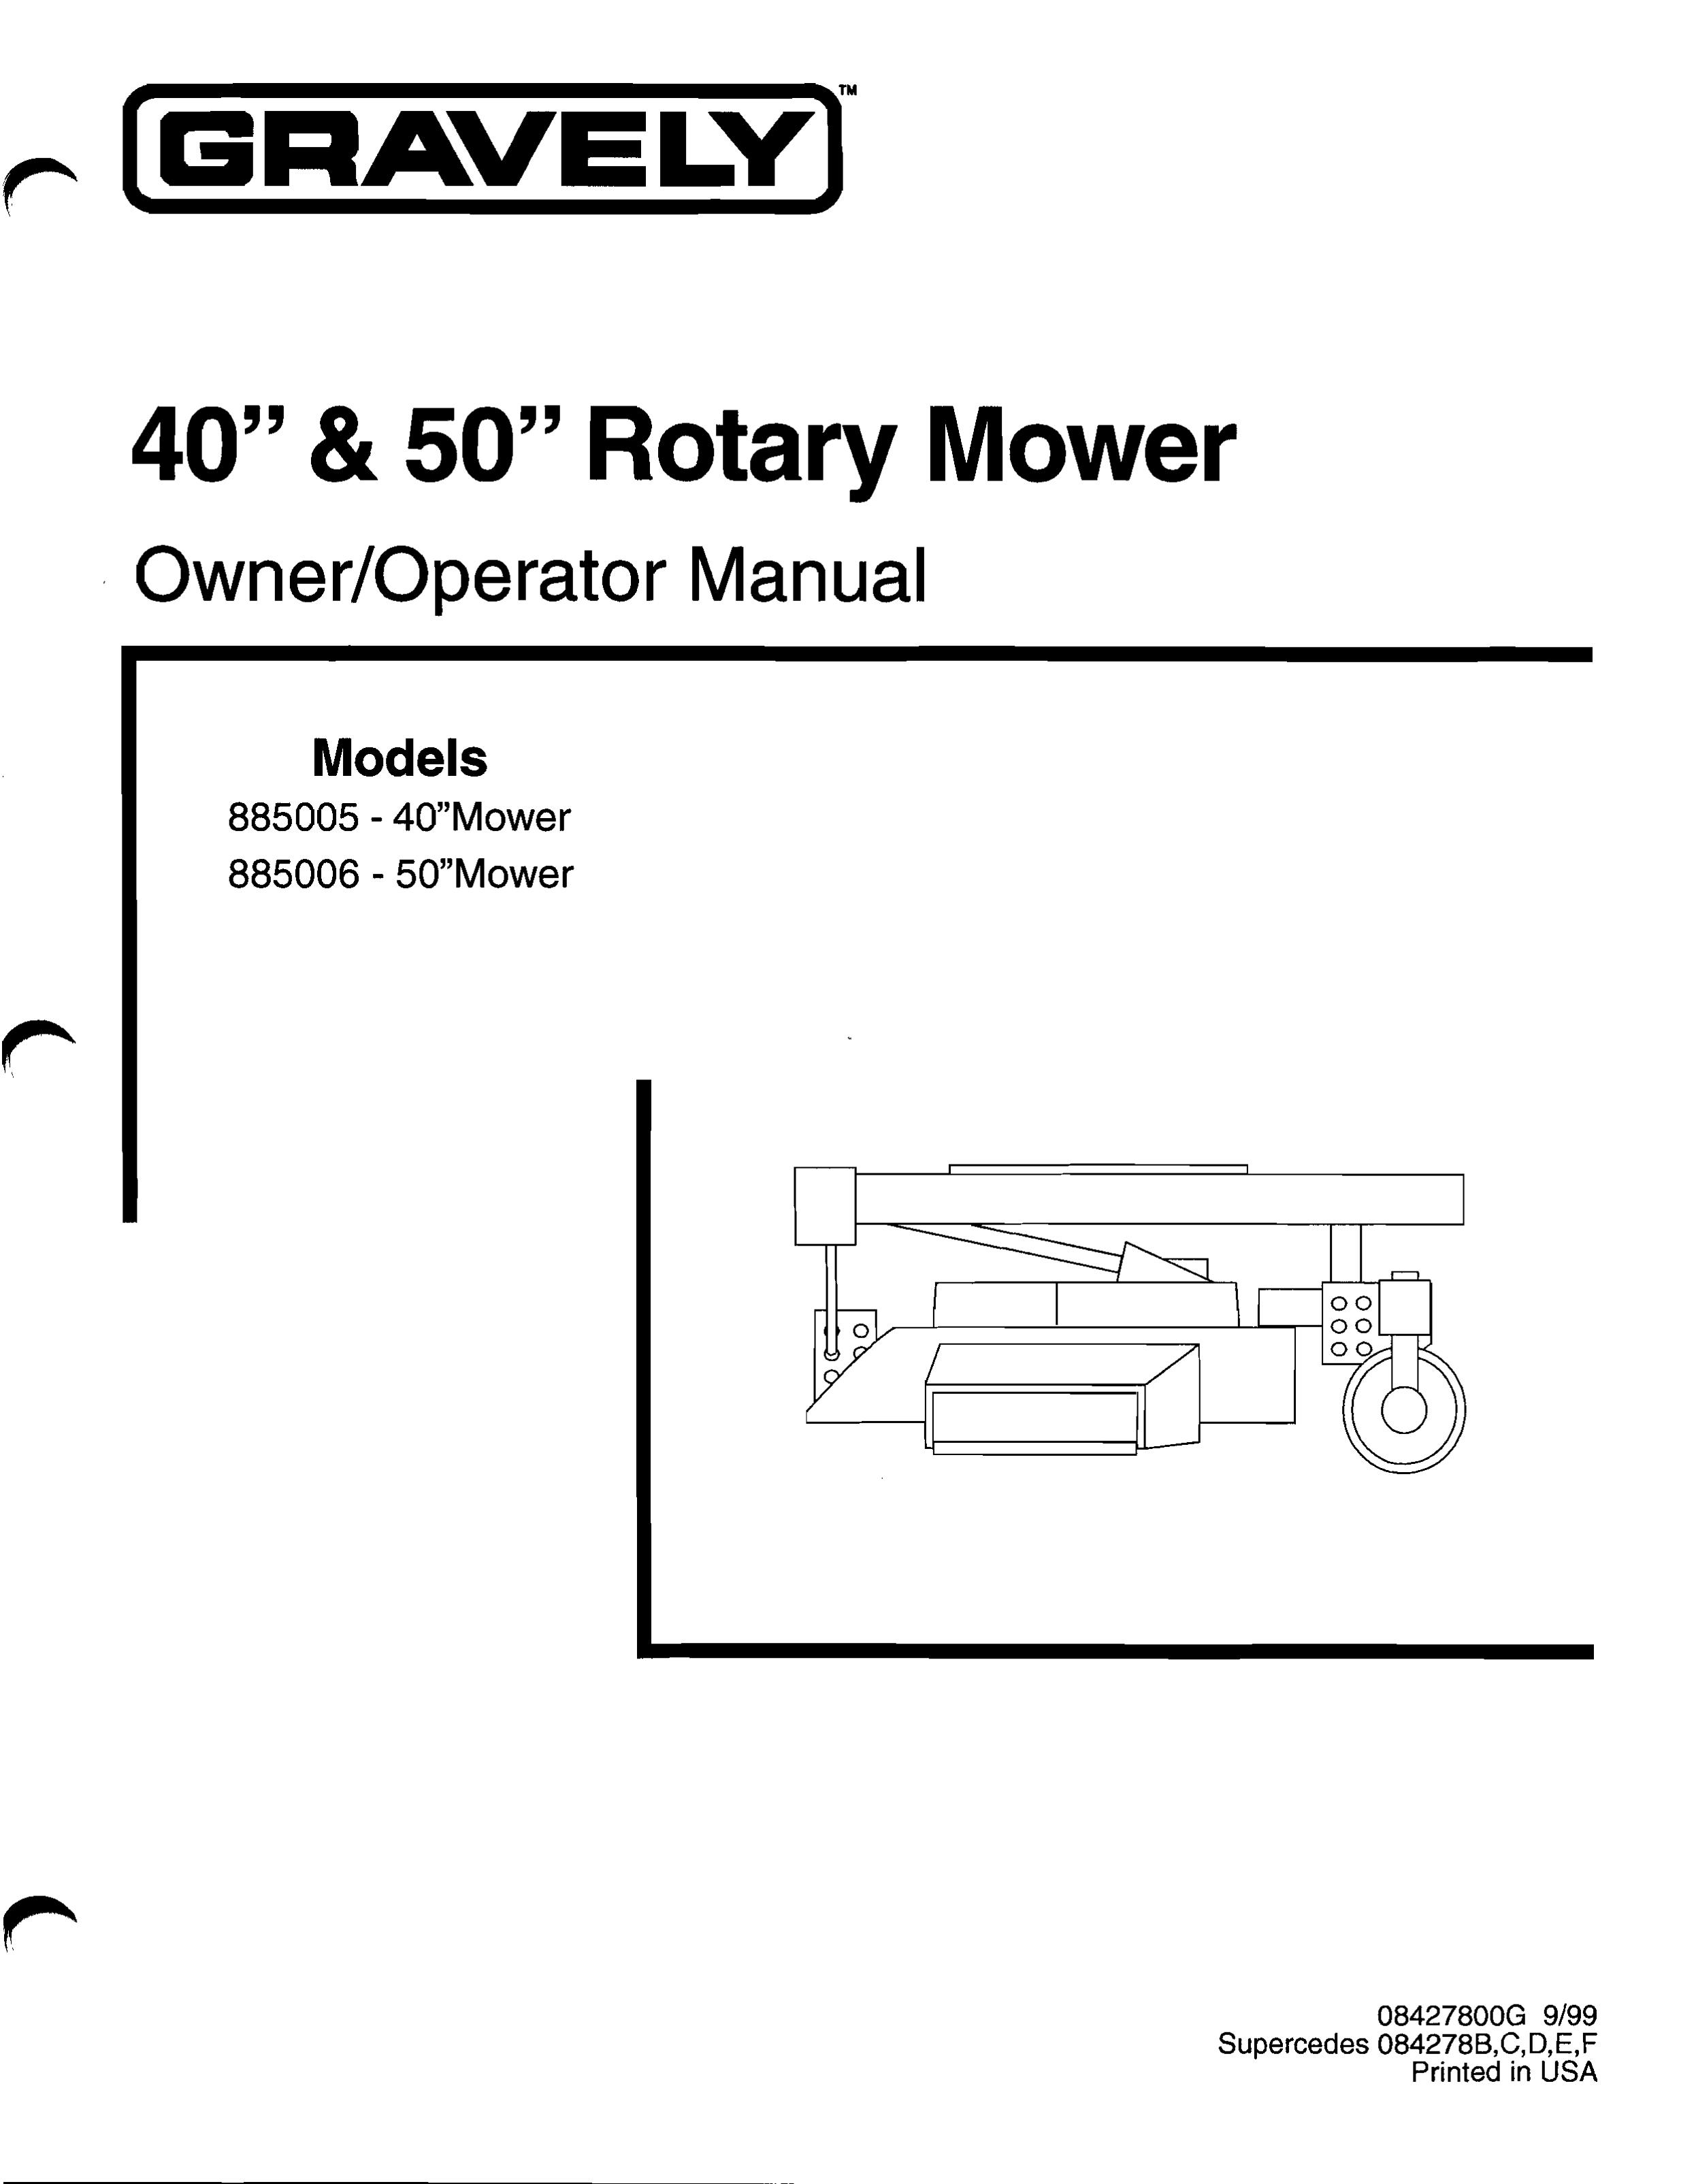 Gravely 885005 Lawn Mower User Manual